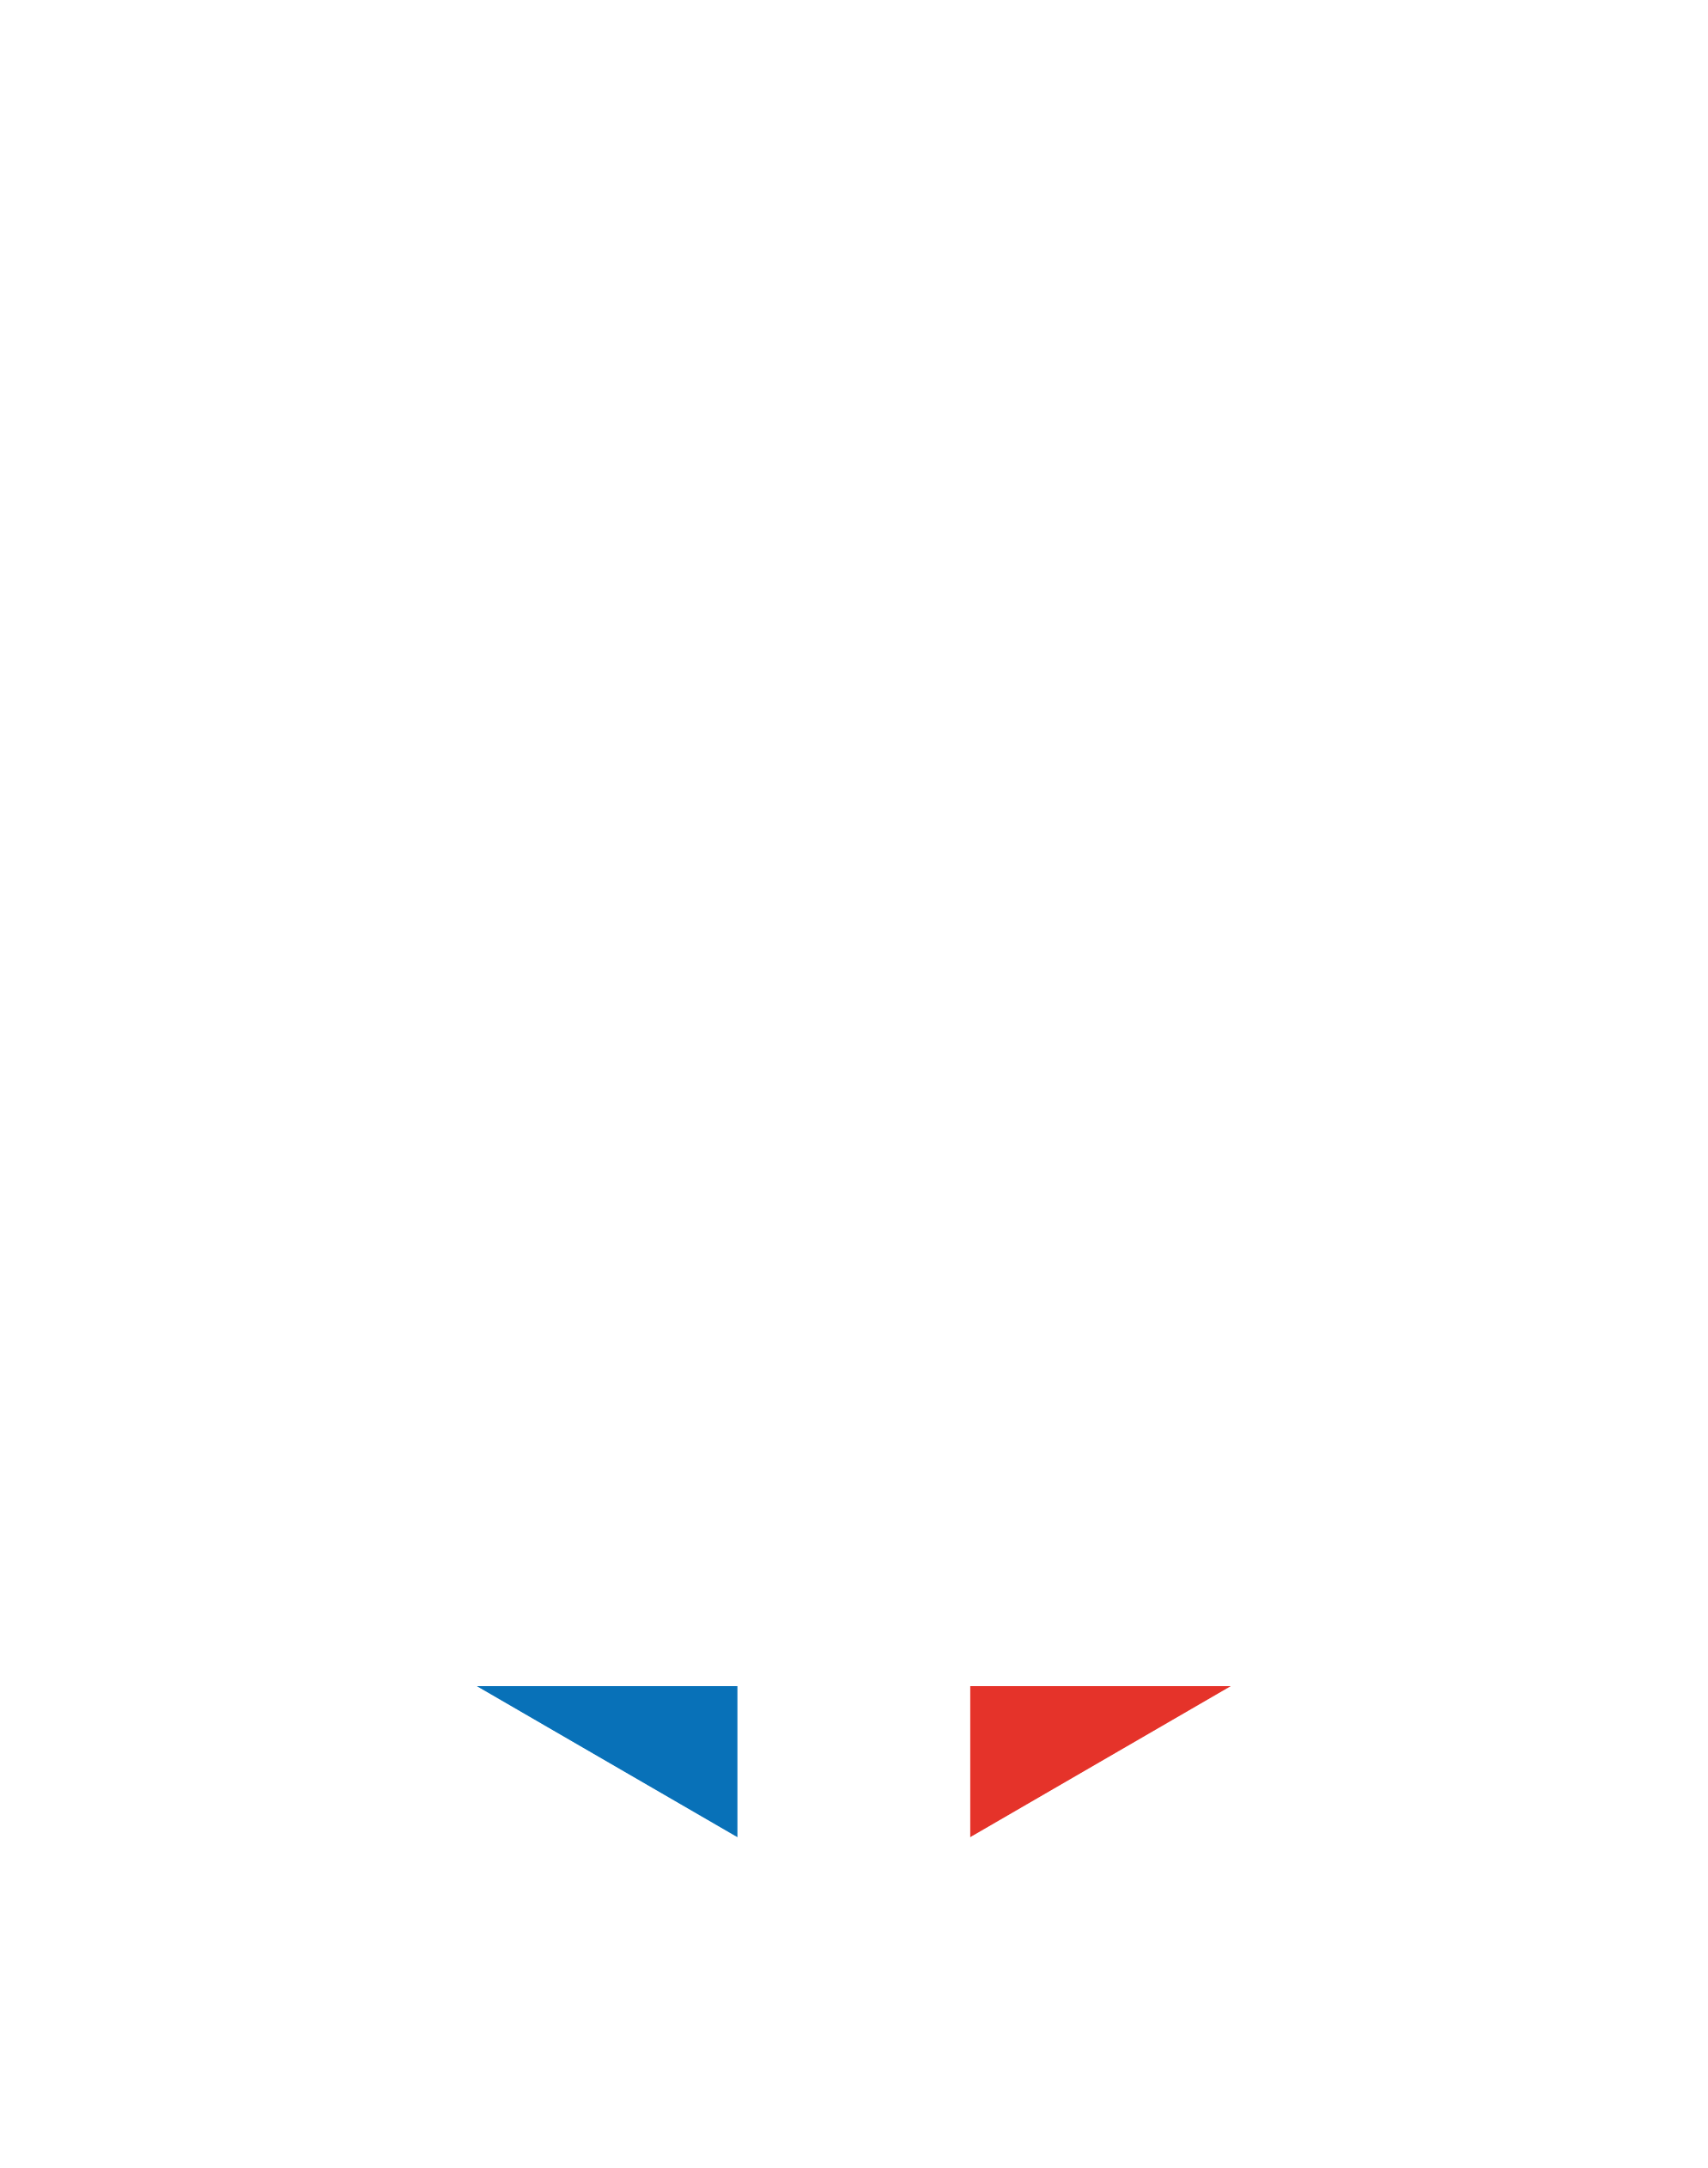 Race Across France